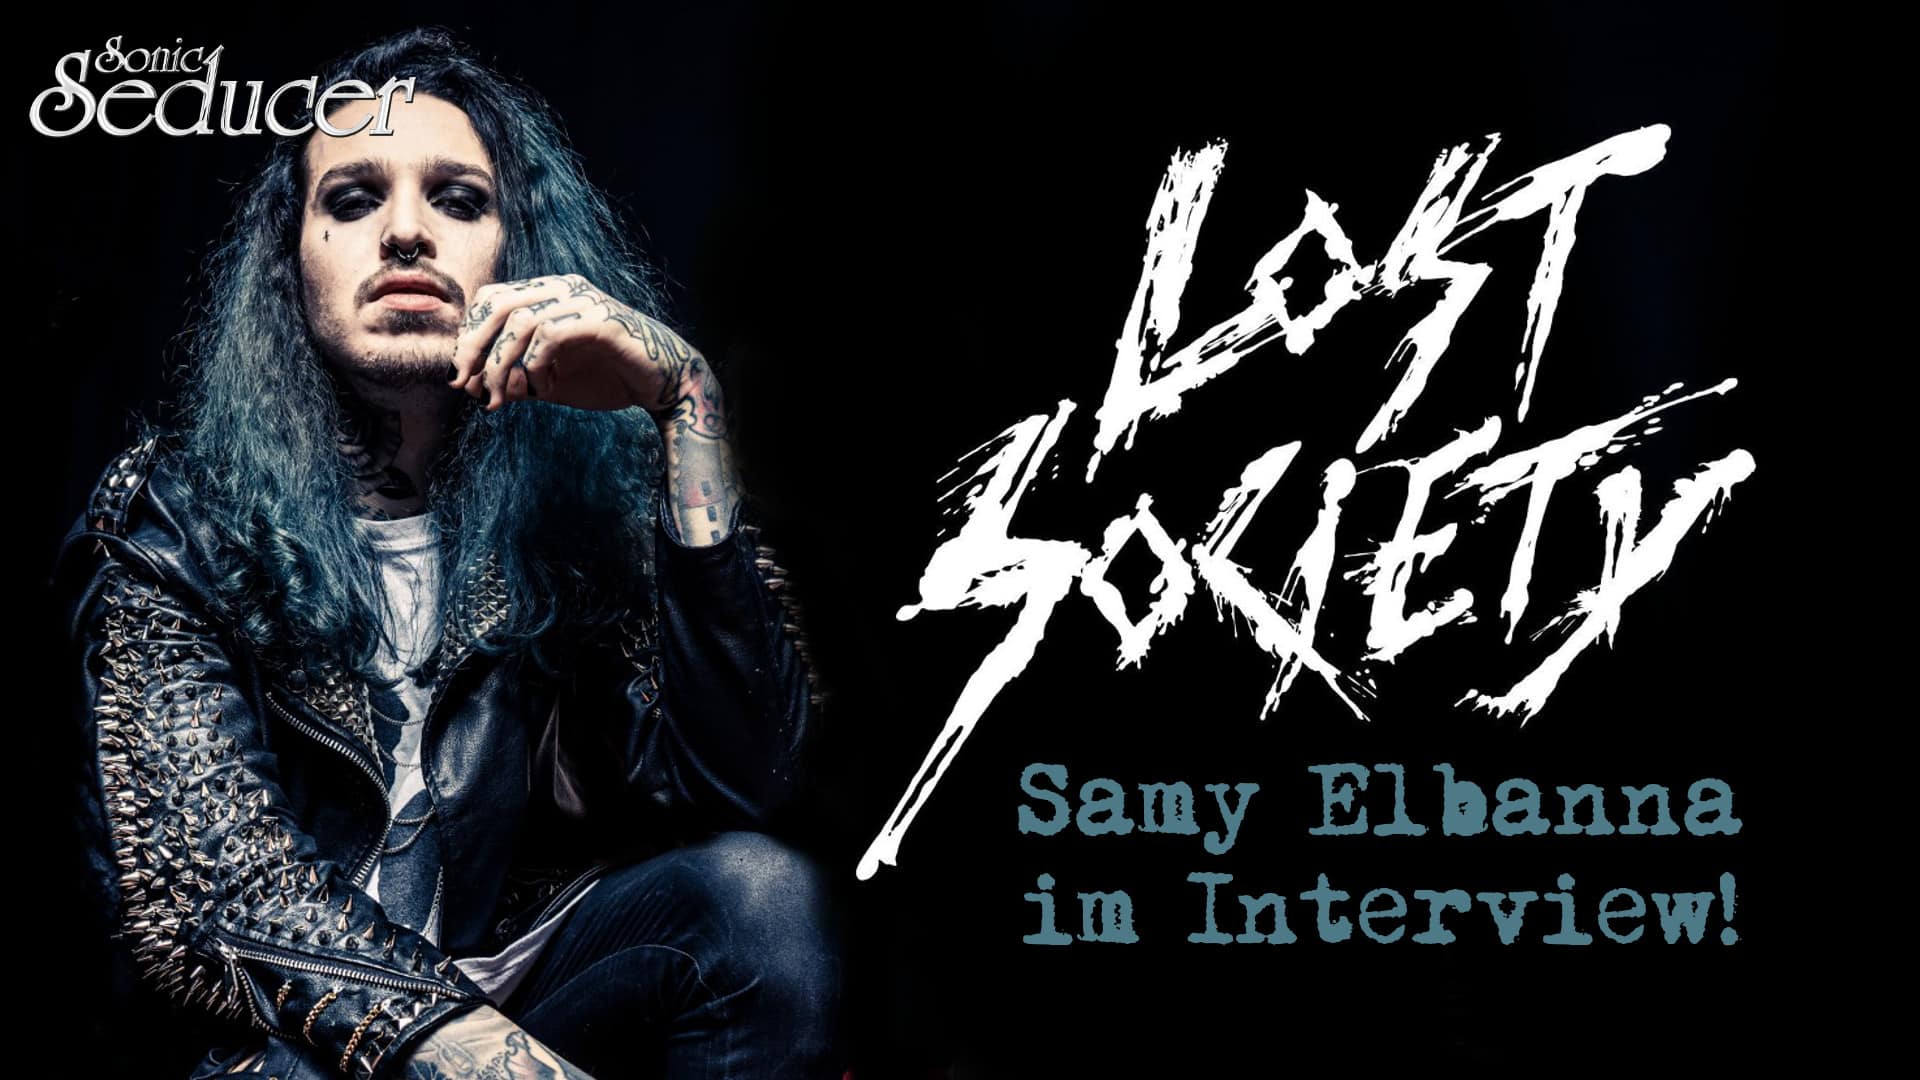 sonic-seducer-im-interview-samy-elbanna-lost-society.jpg